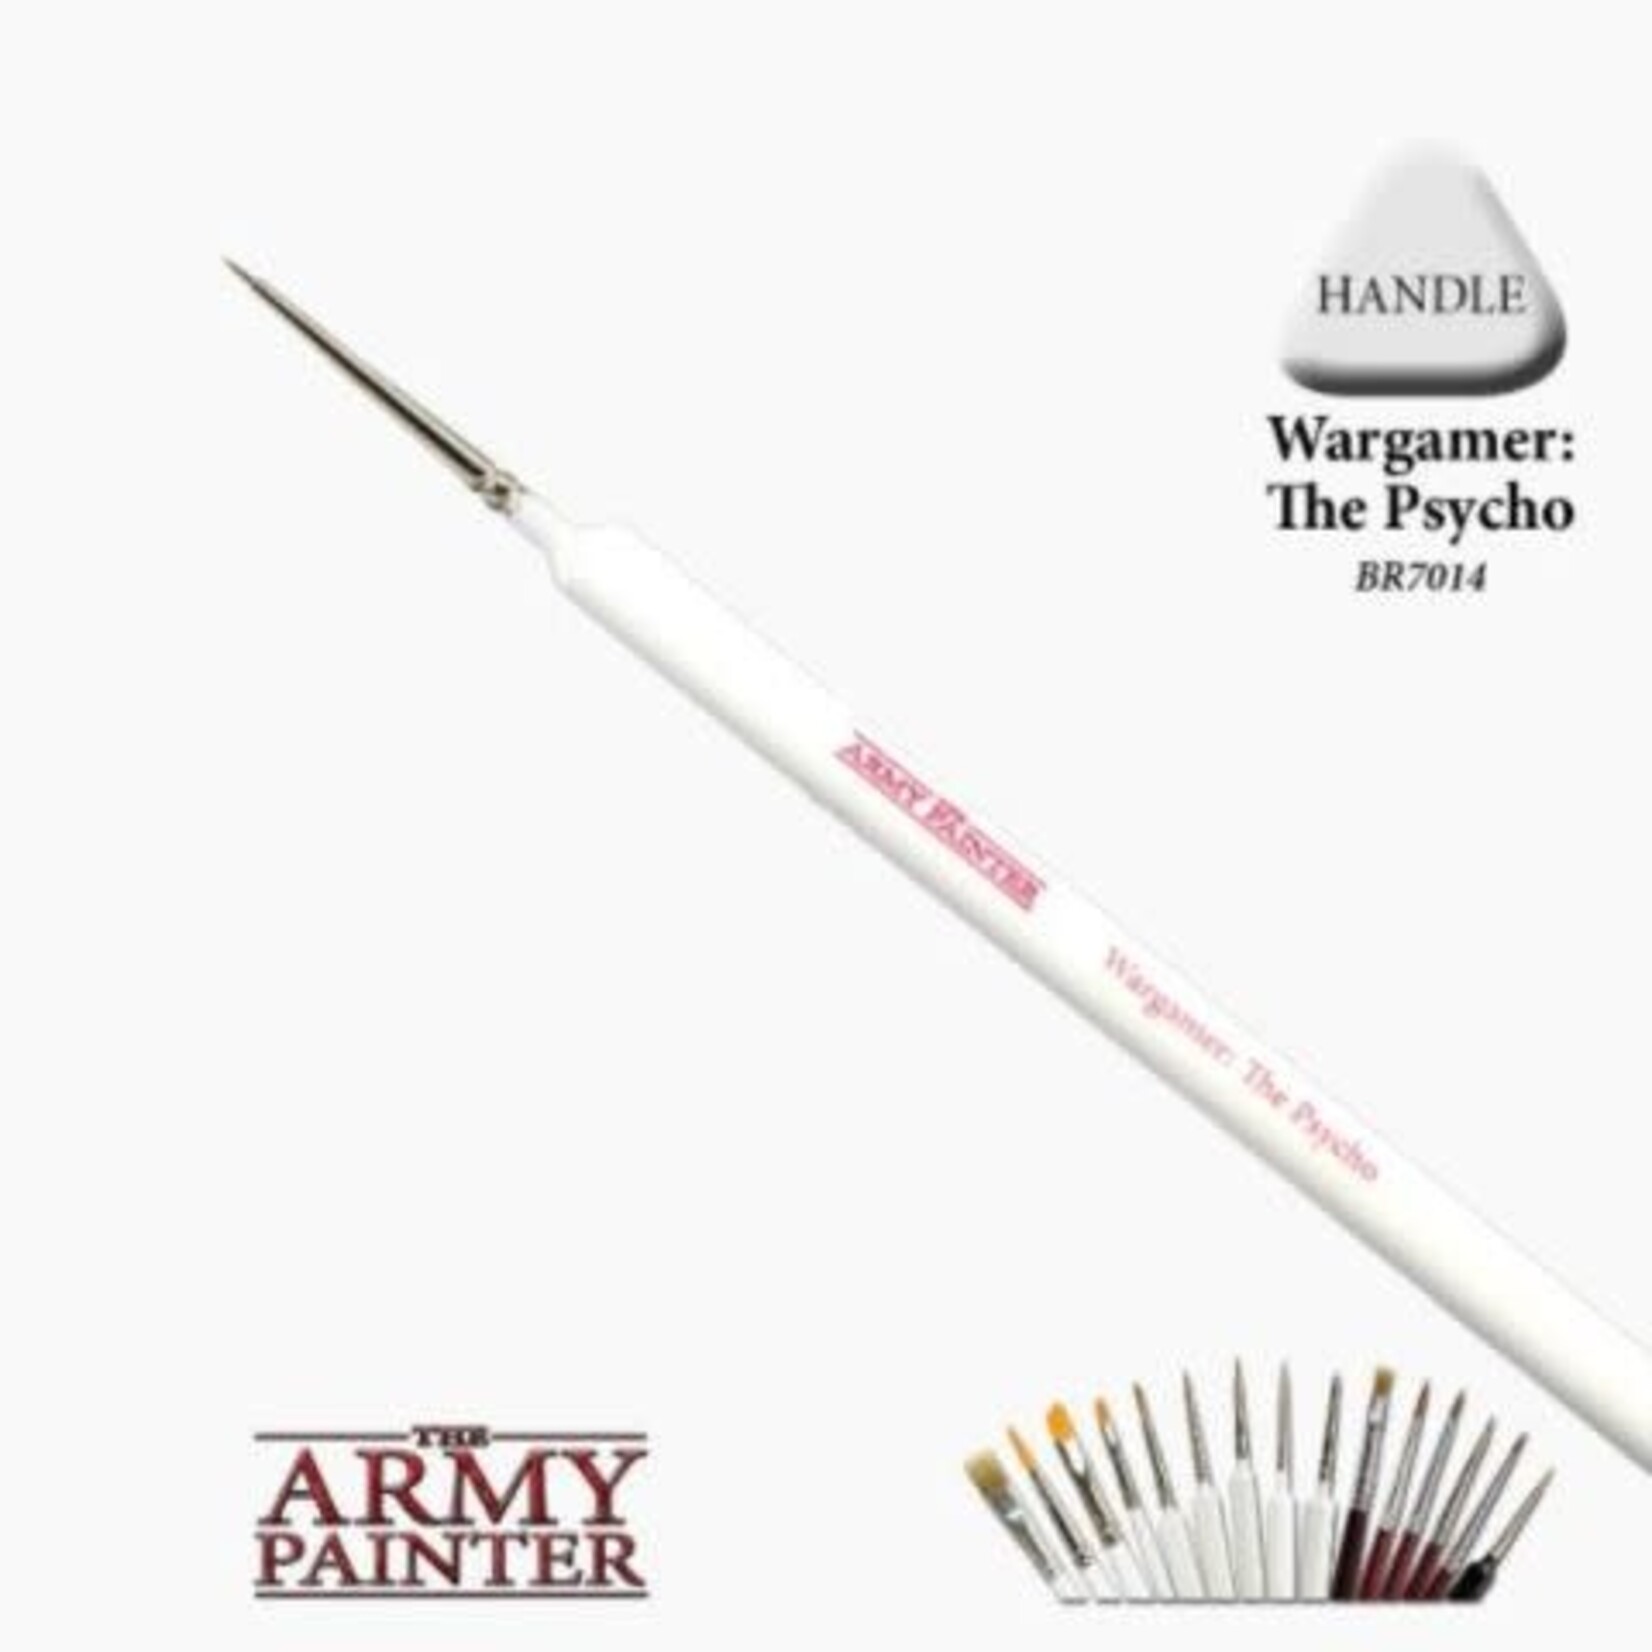 Army Painter Wargamer Brush: The Psycho